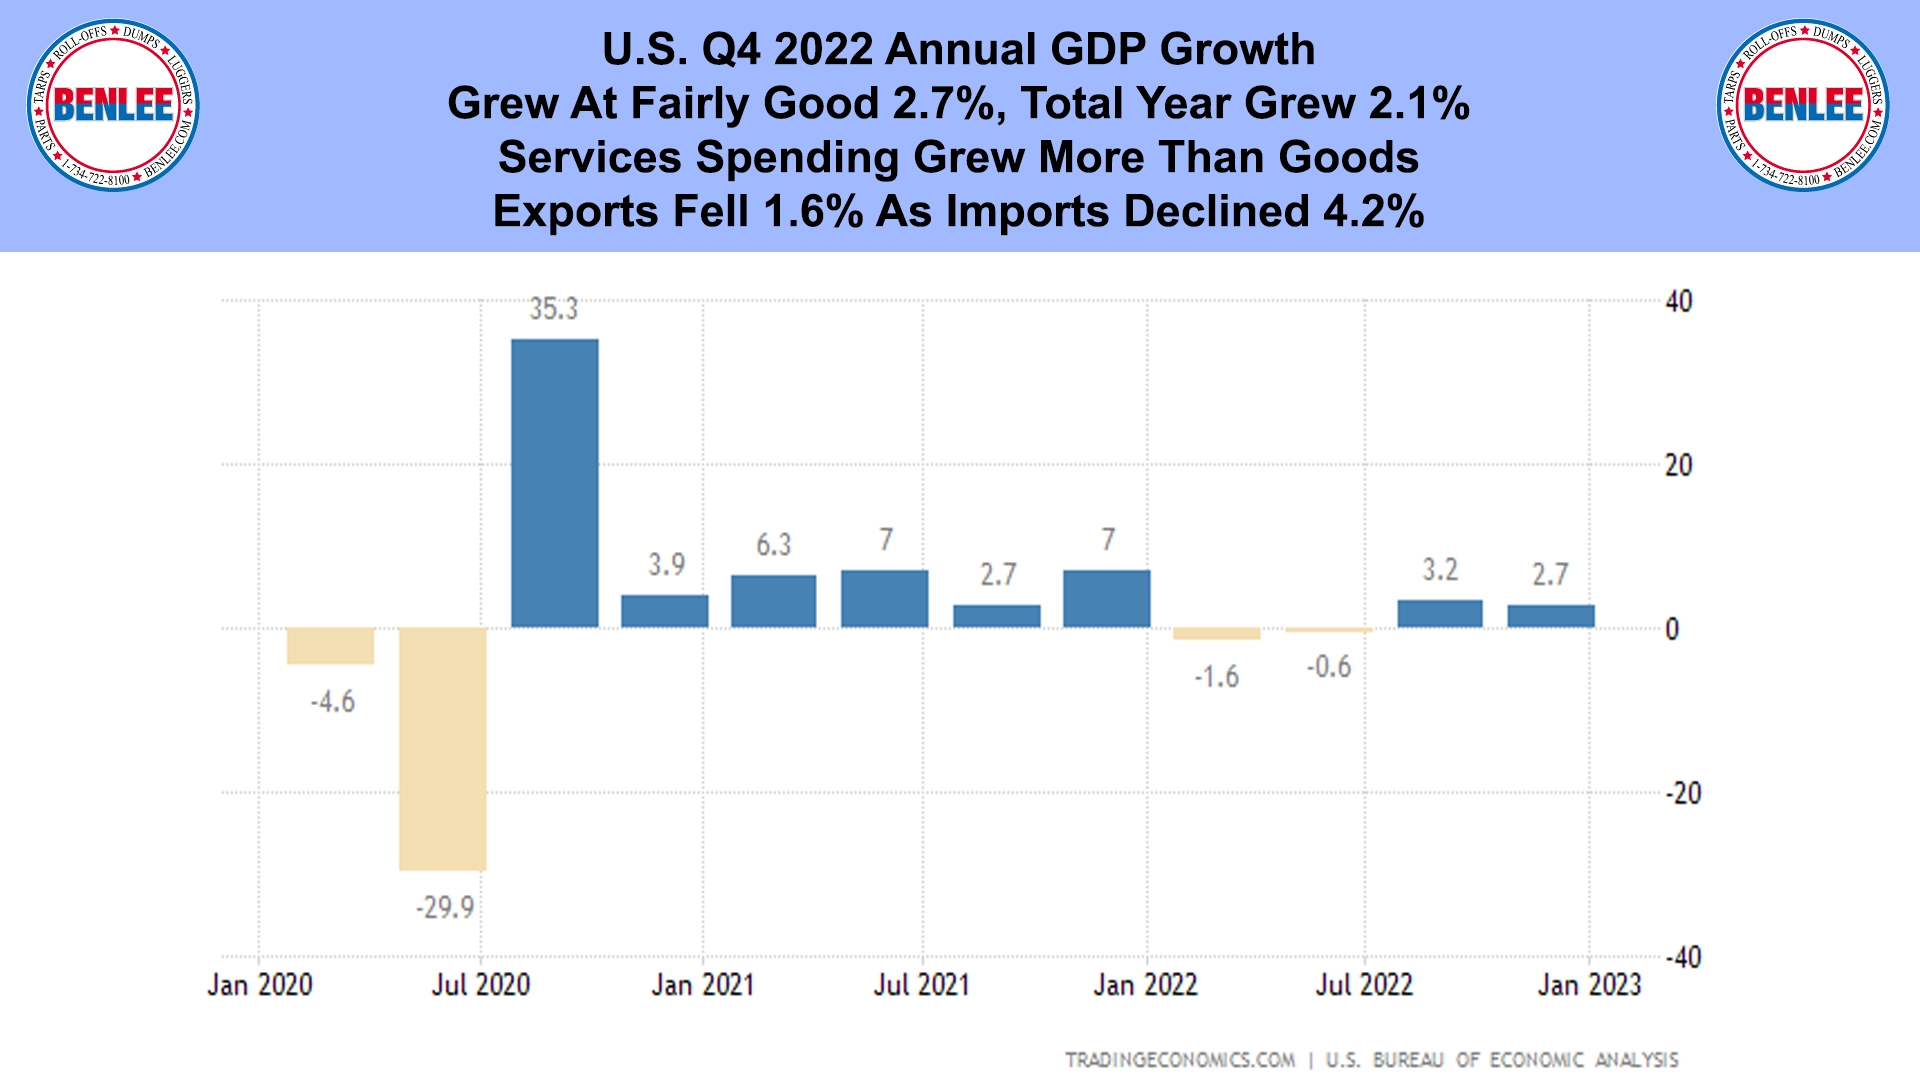 U.S. Q4 2022 Annual GDP Growth